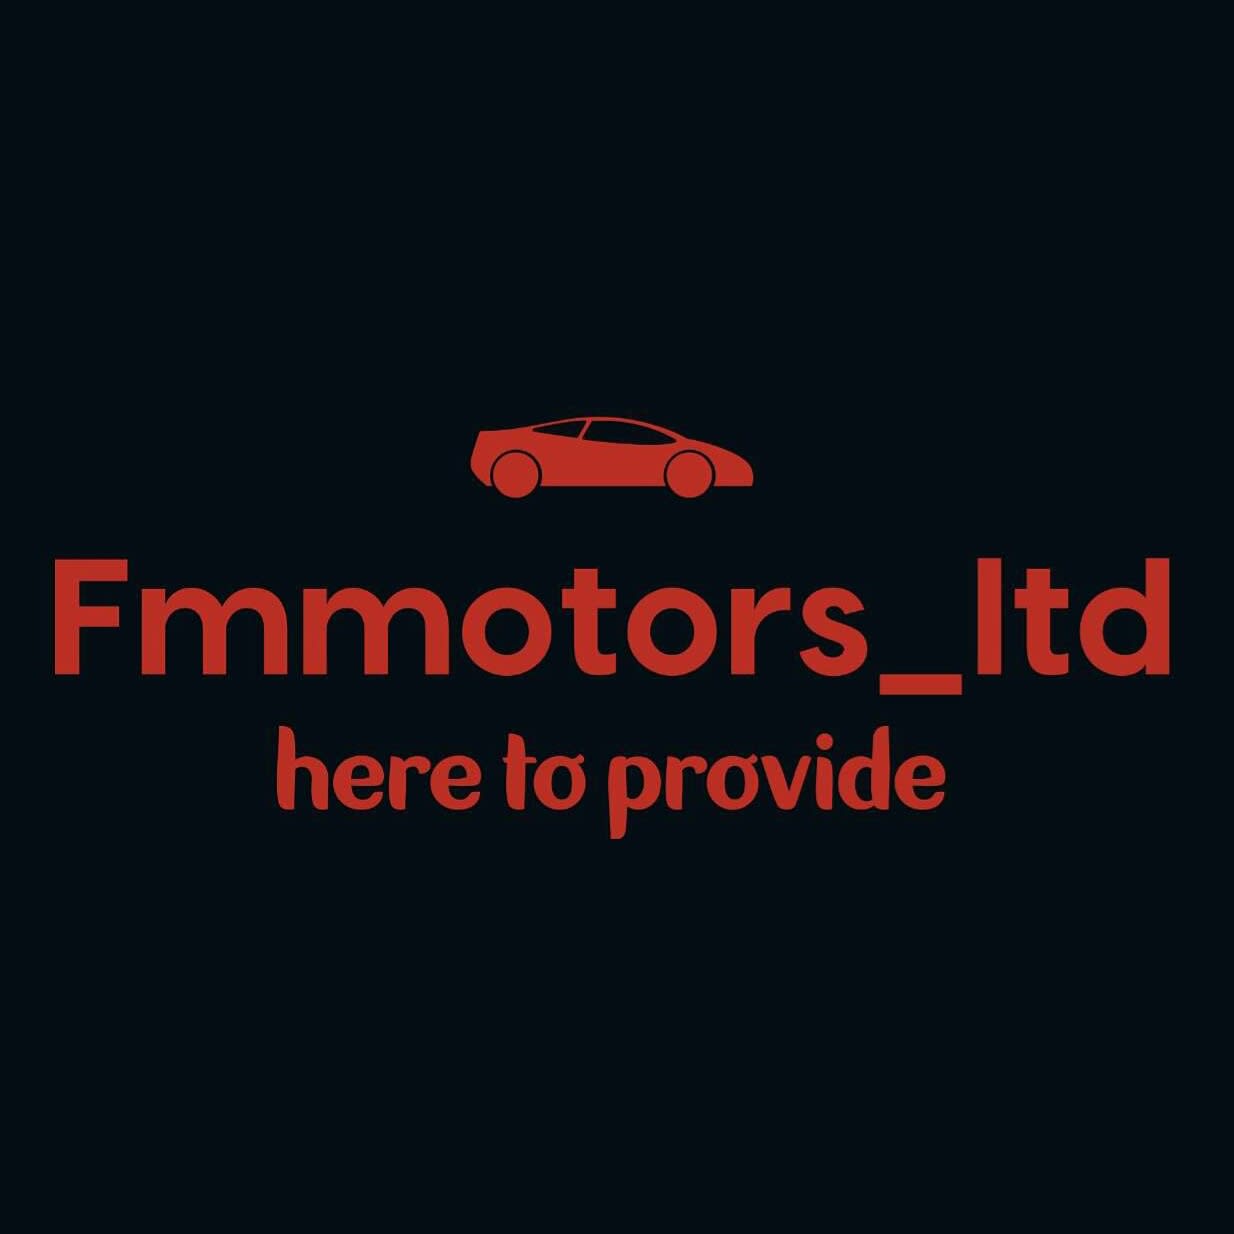 FM Motors Ltd